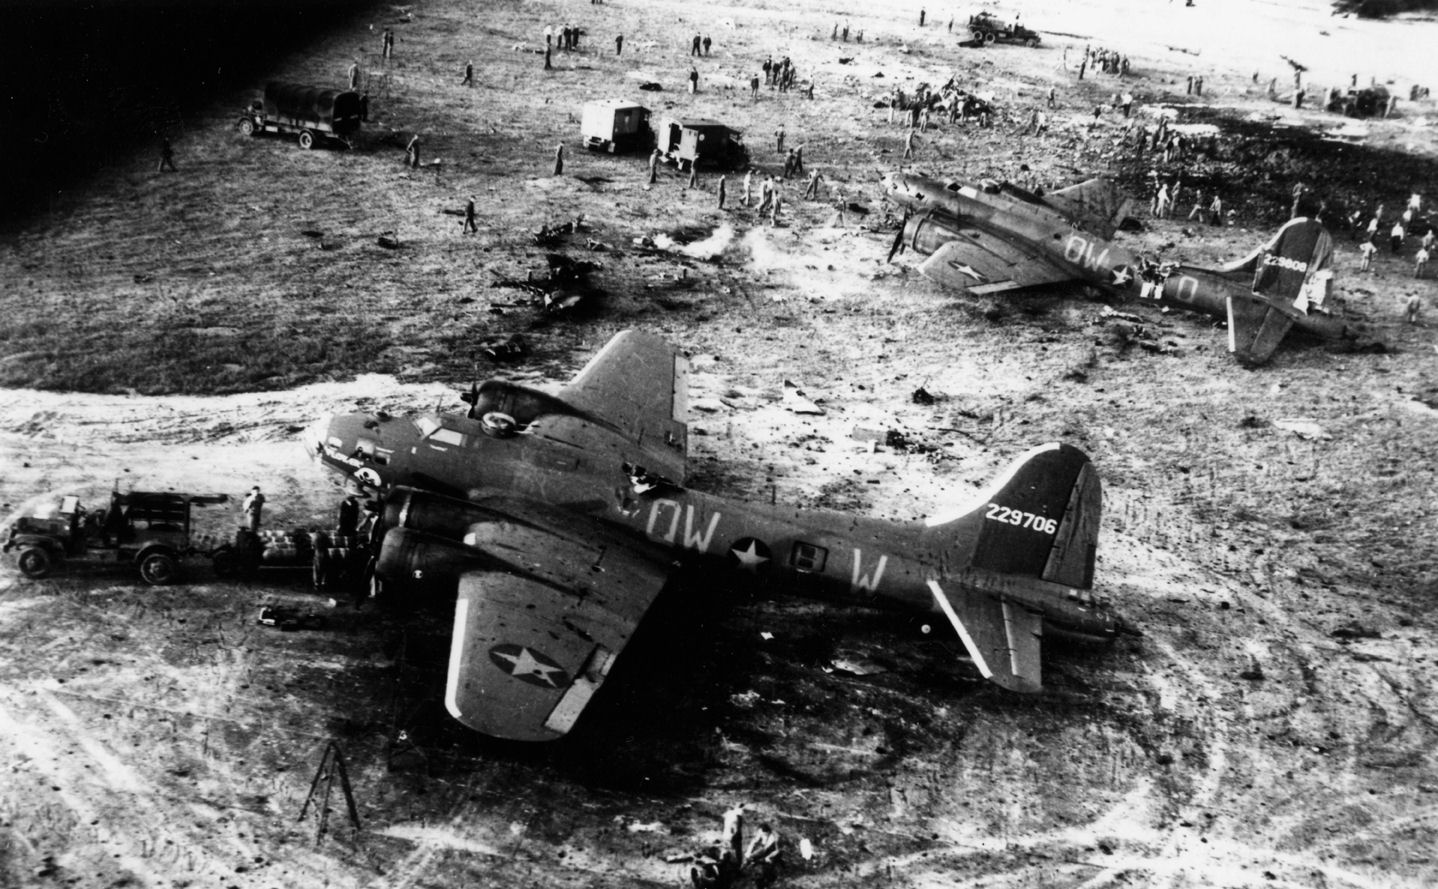 002-95th_Bomb_Group_Explosion_Alconbury_28_May_1943.jpg